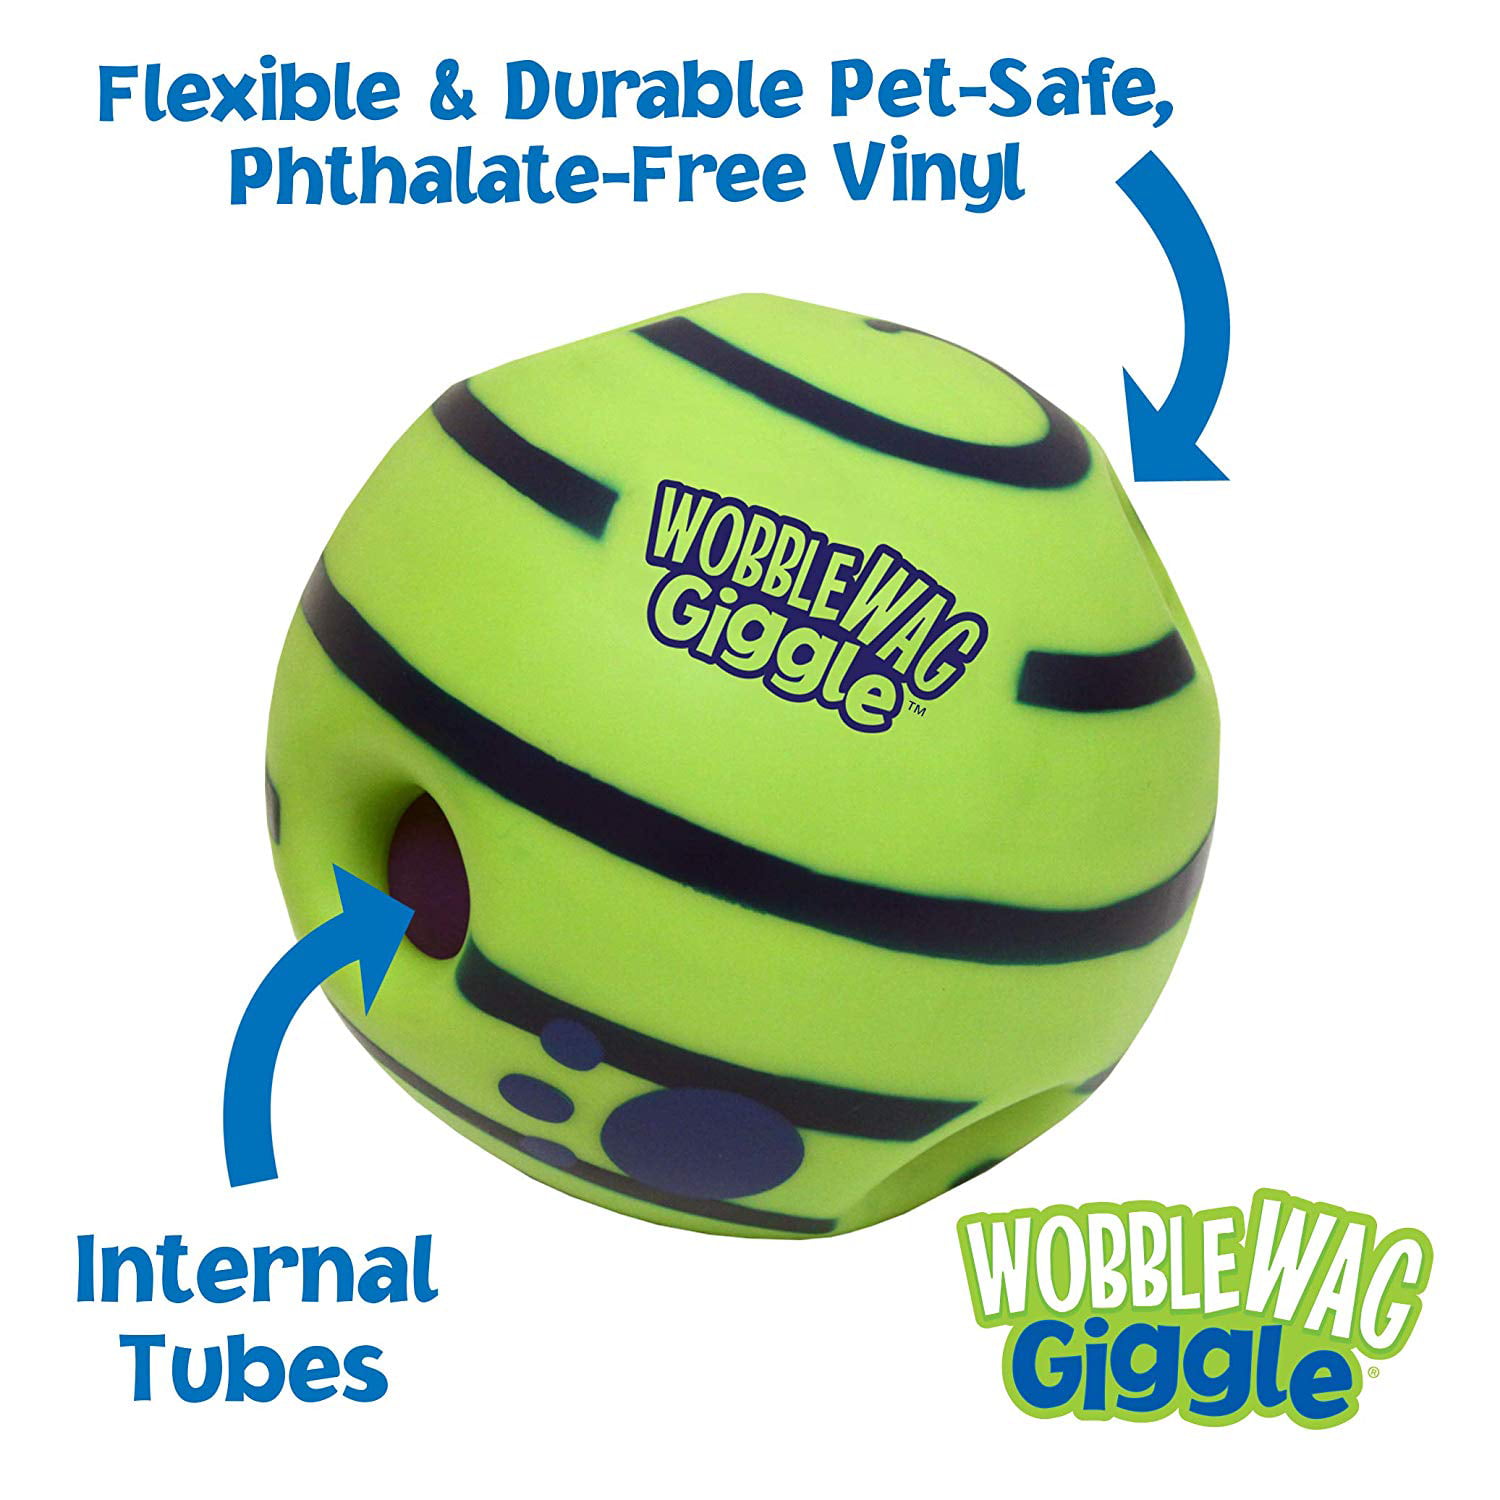 wobble wag giggle ball sizes